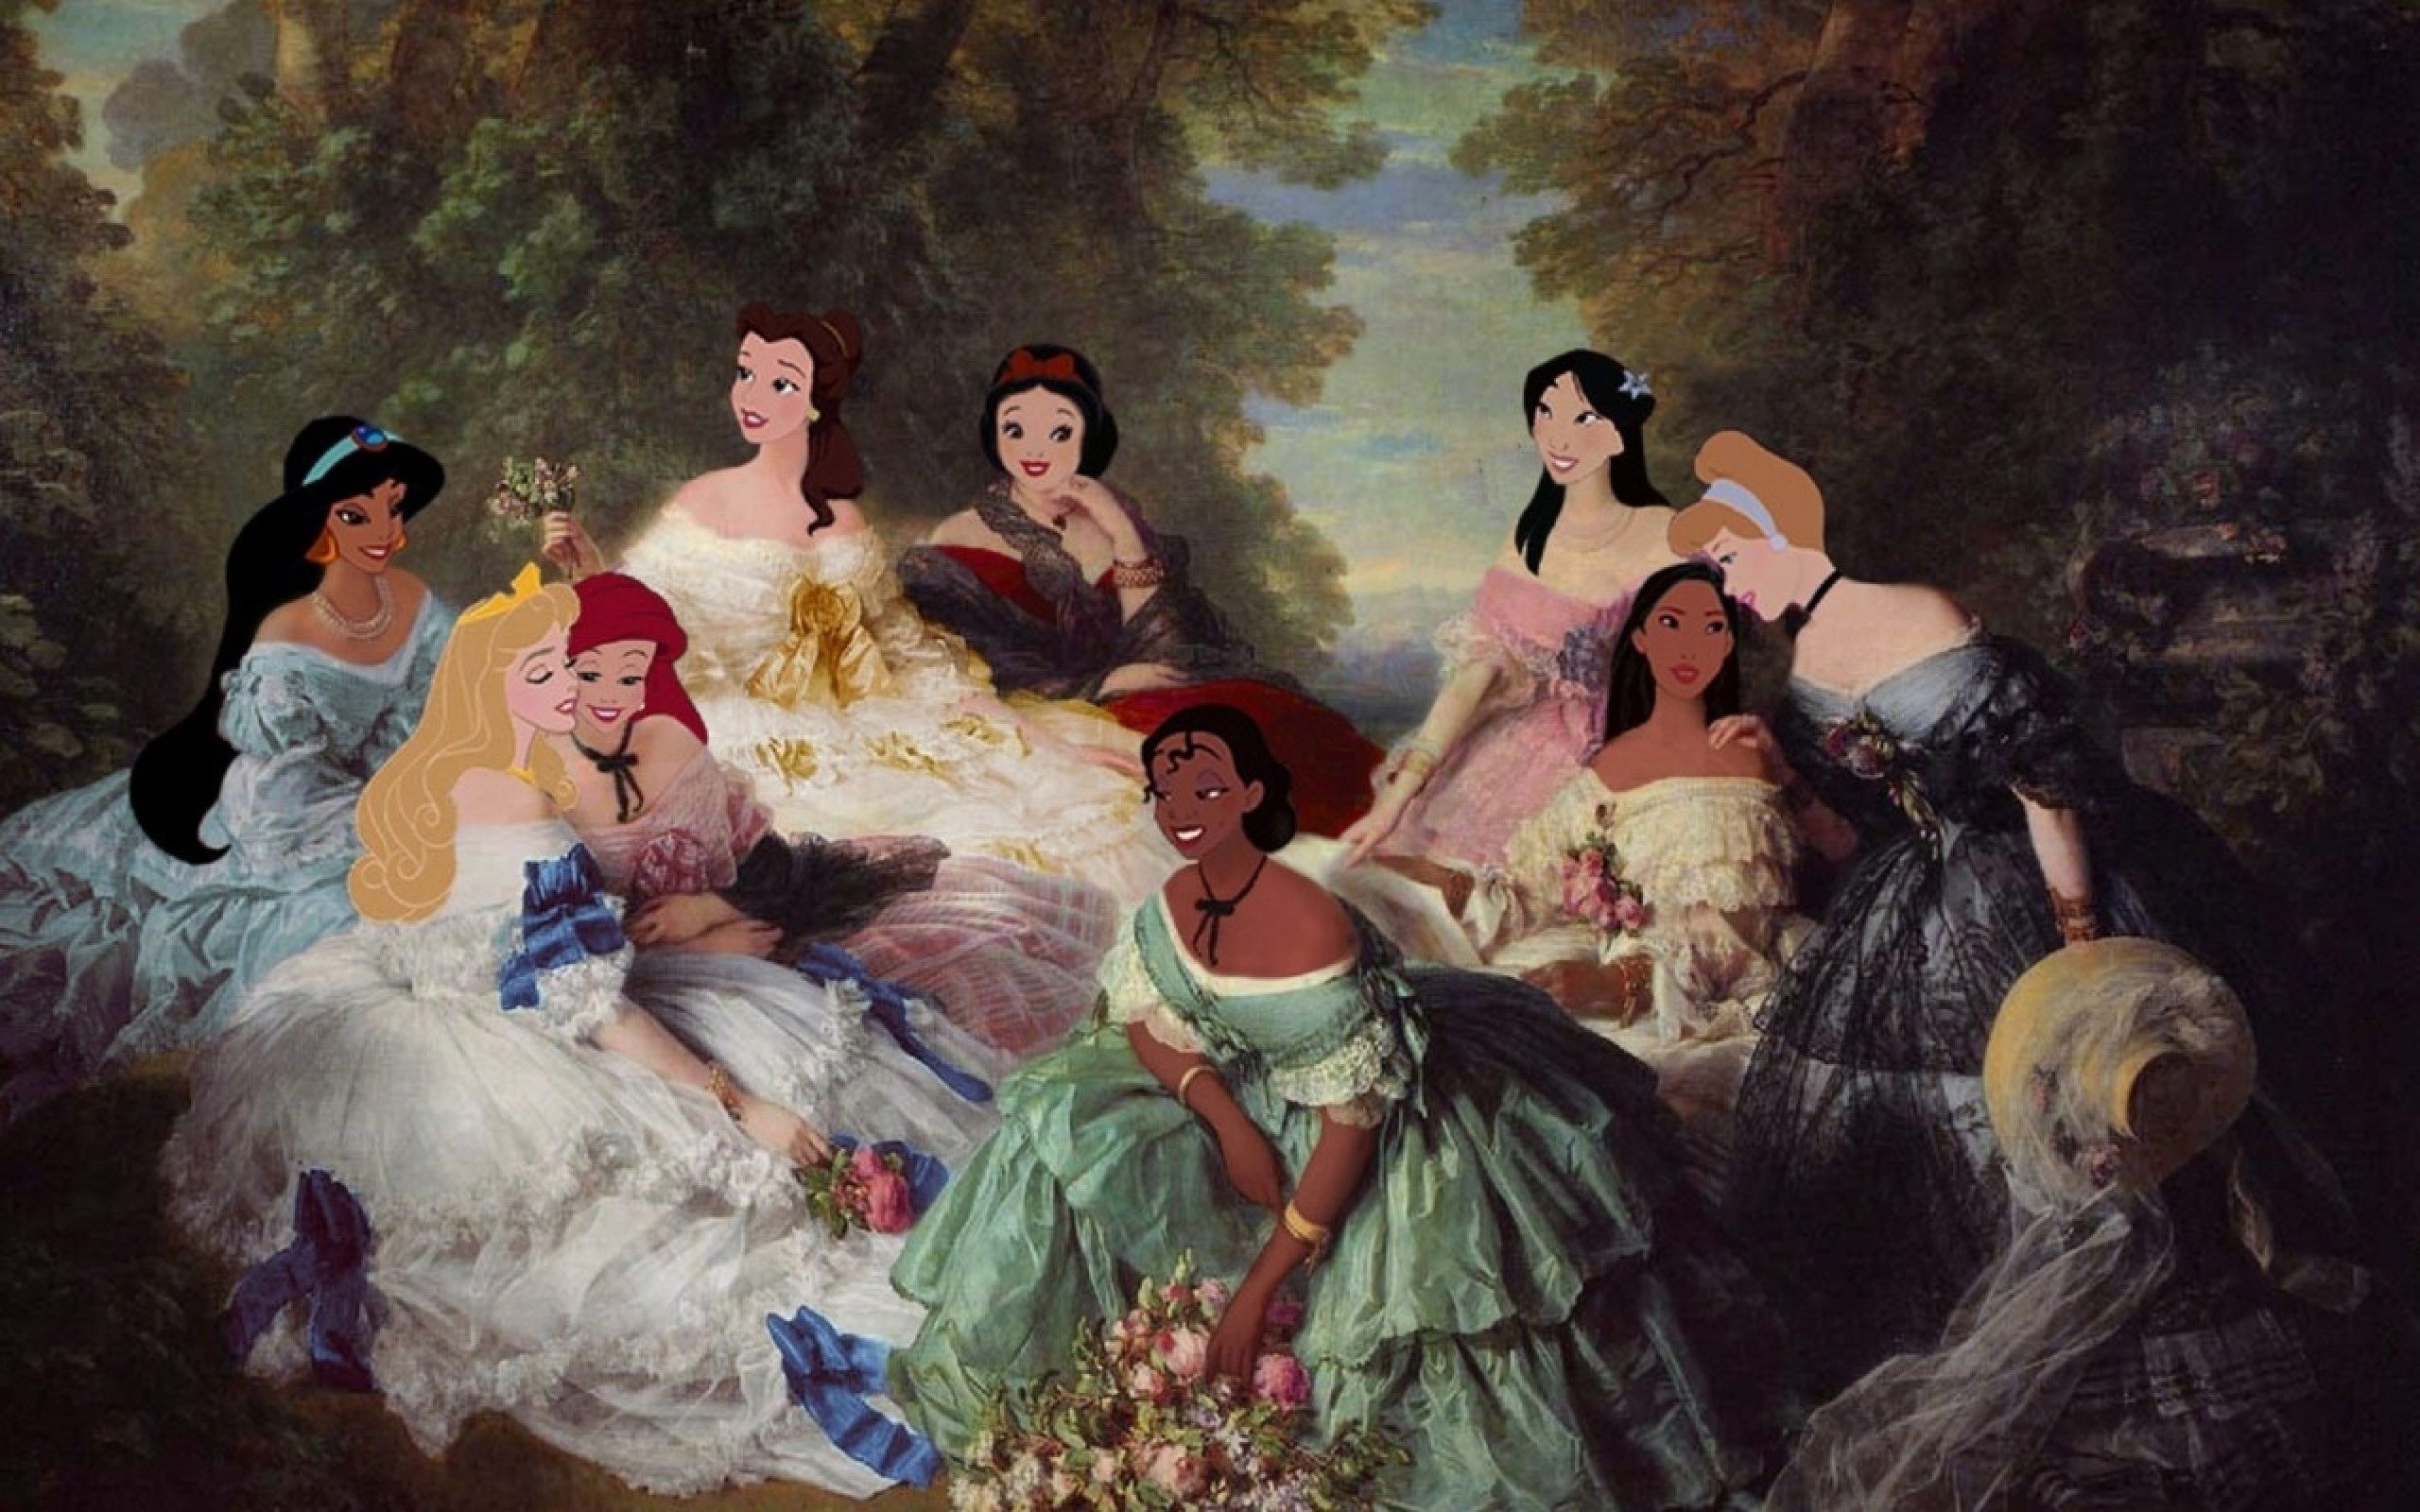 A group of women dressed in dresses - Mulan, Disney, princess